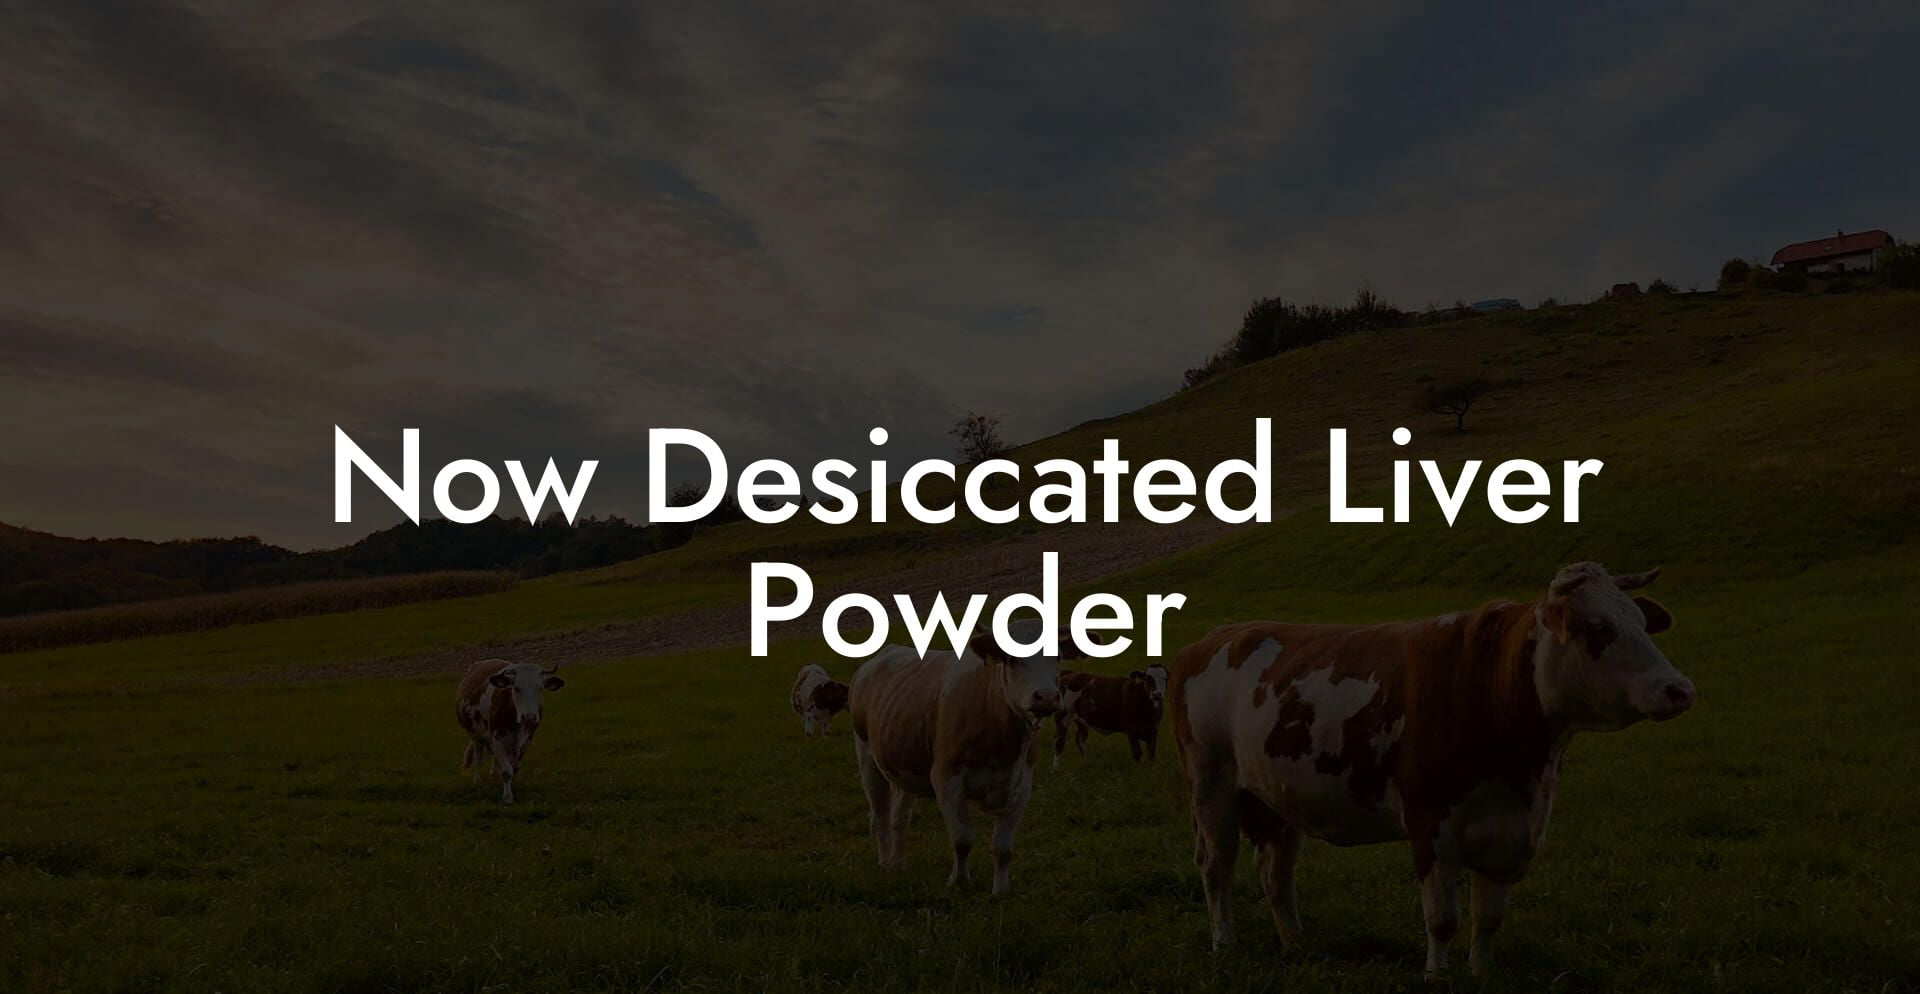 Now Desiccated Liver Powder